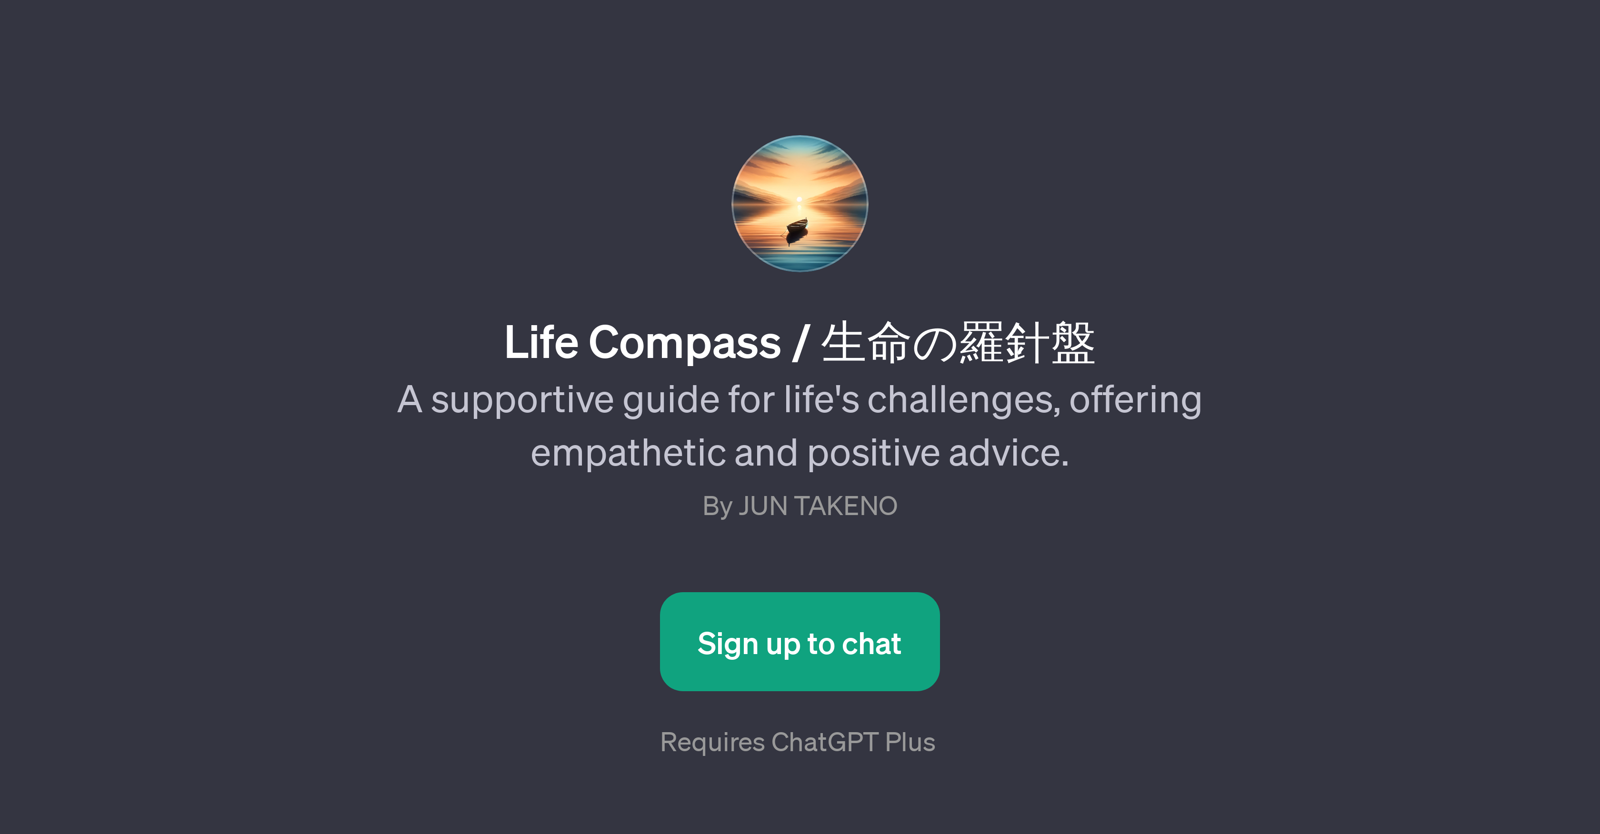 Life Compass / website